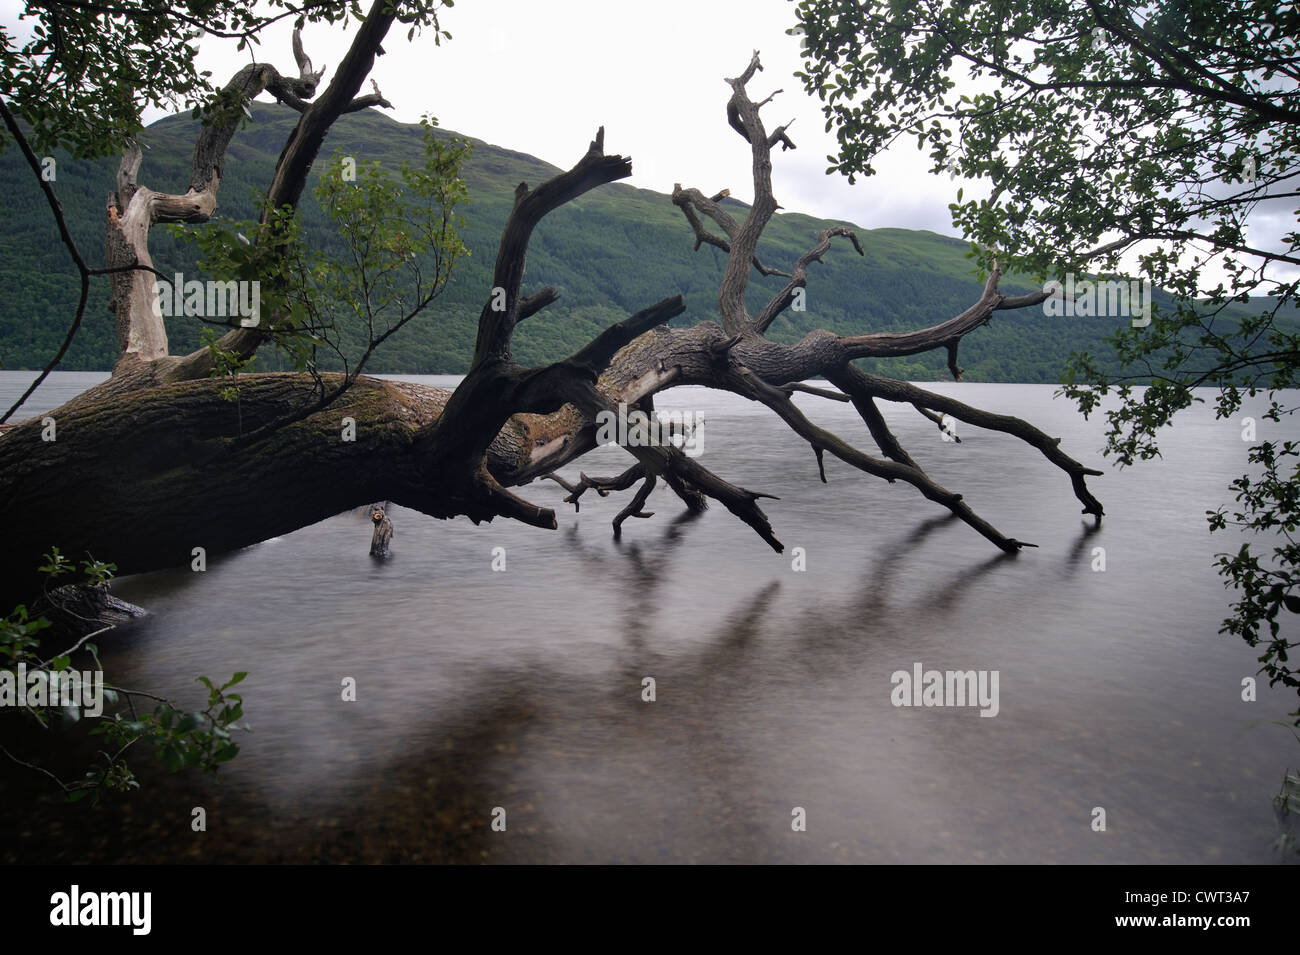 A tree fallen across a lake Stock Photo